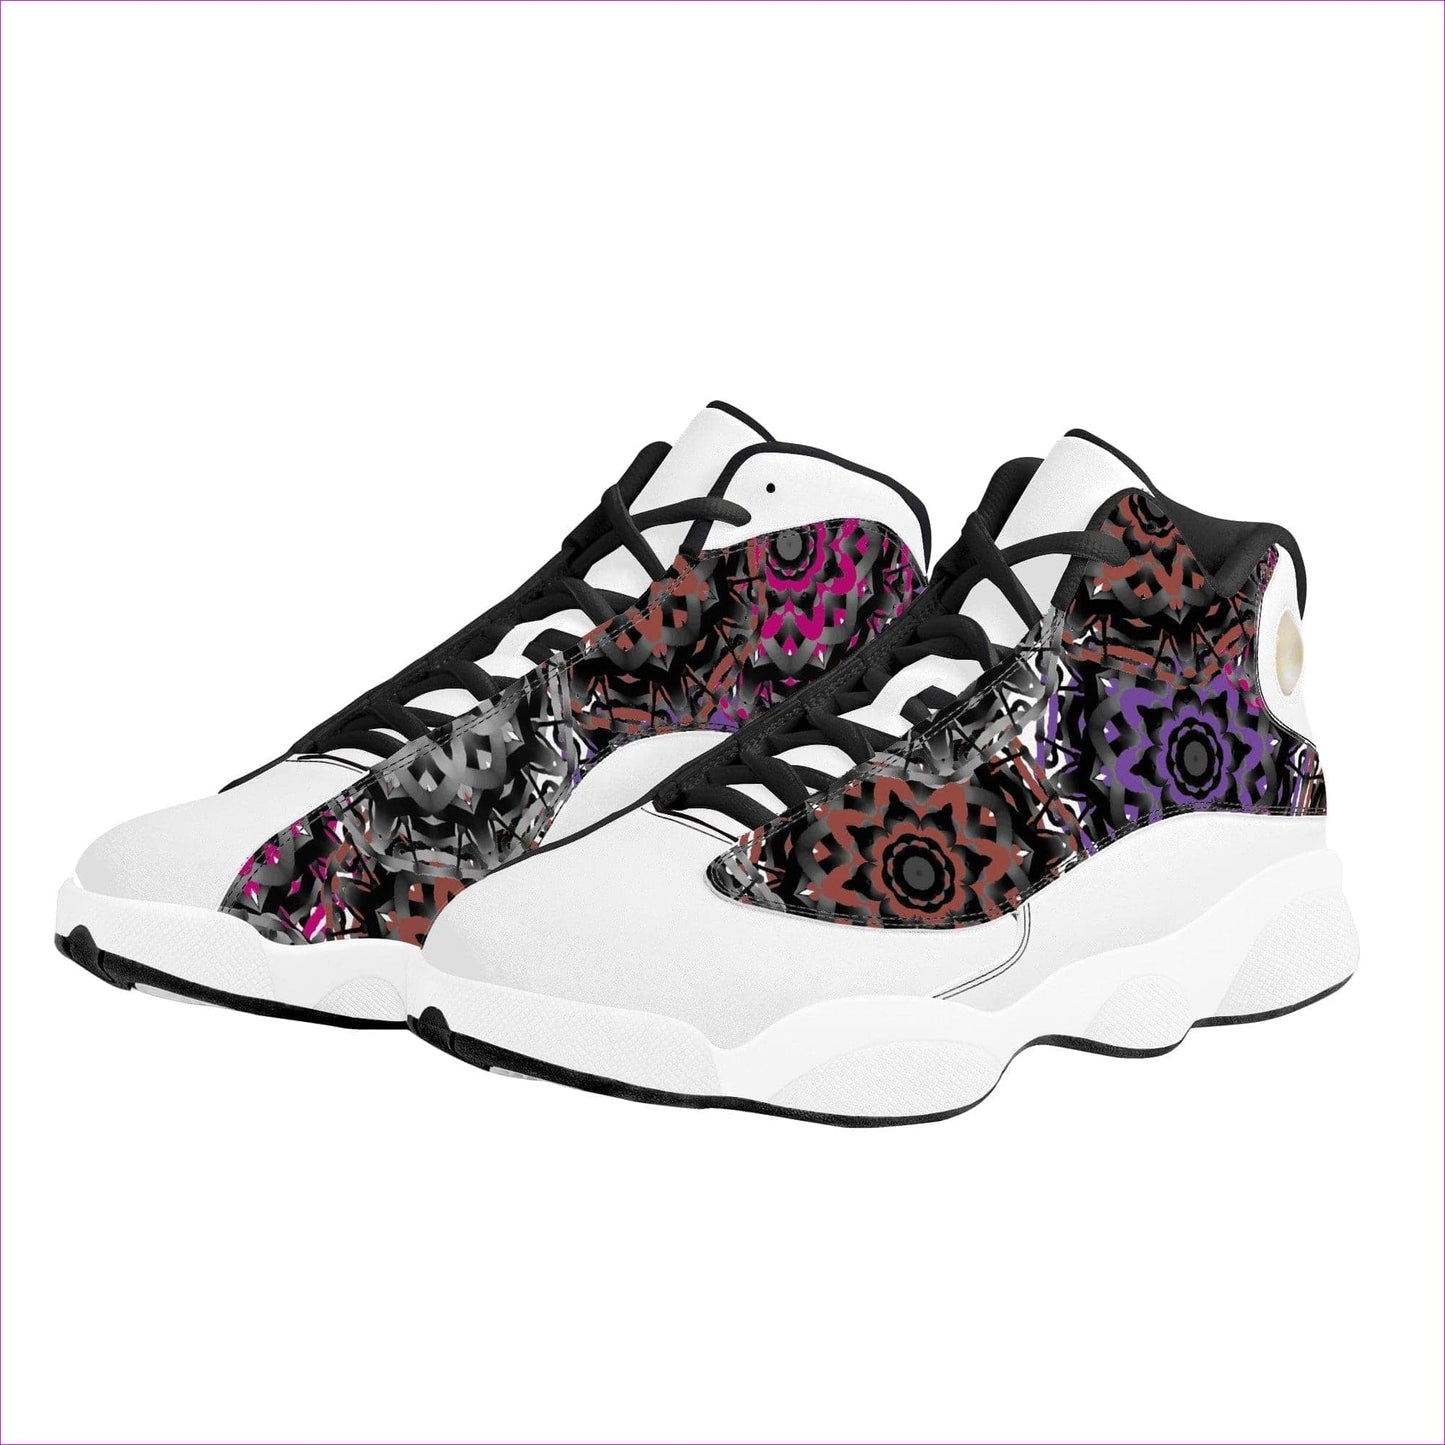 Mandala Graffiti Basketball Shoes - unisex basketball shoes at TFC&H Co.